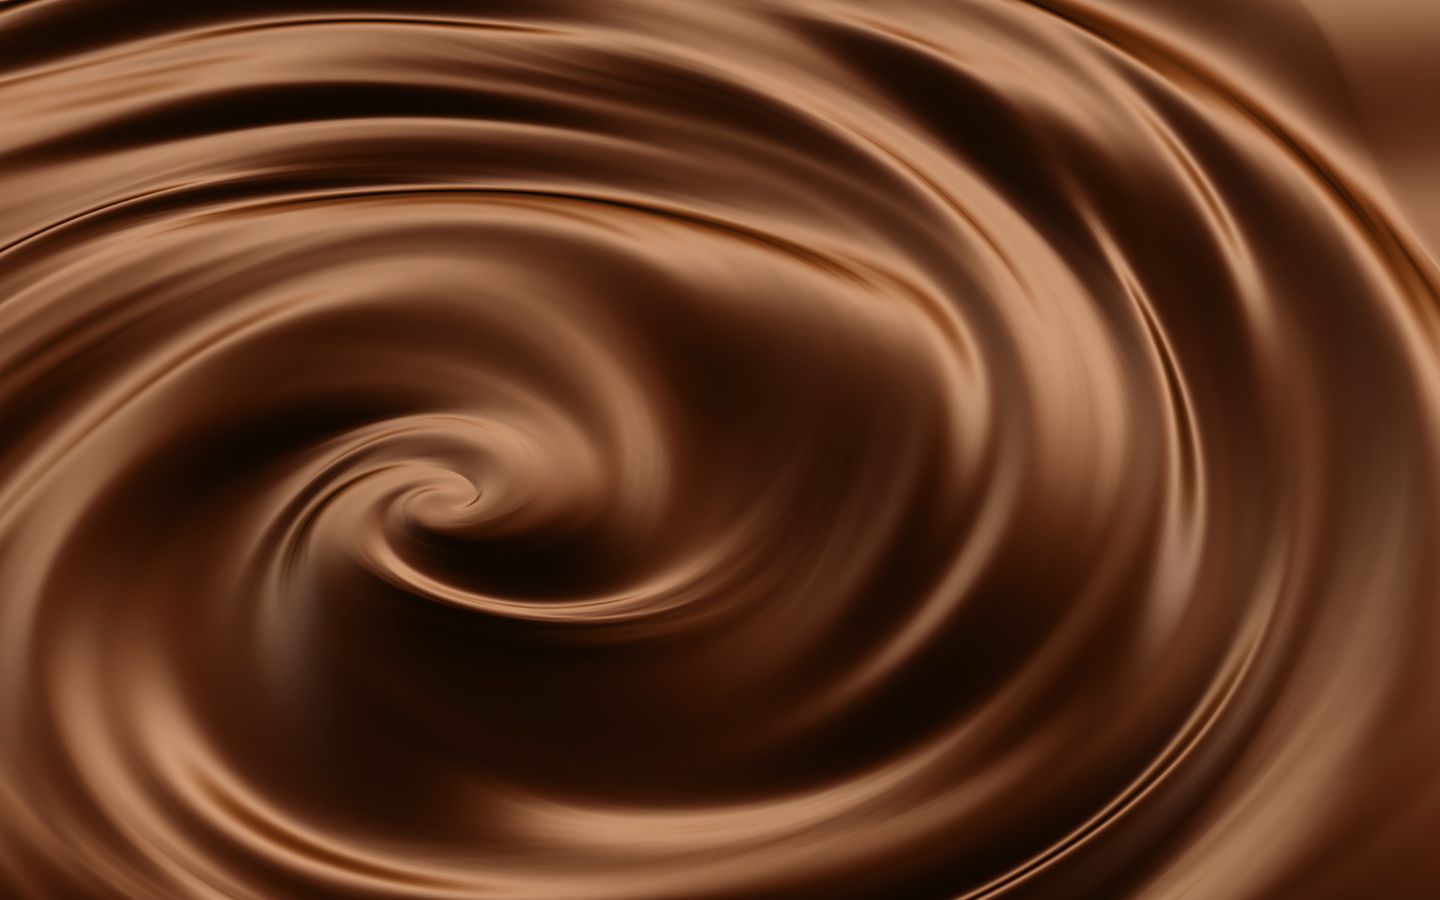 A swirl of chocolate